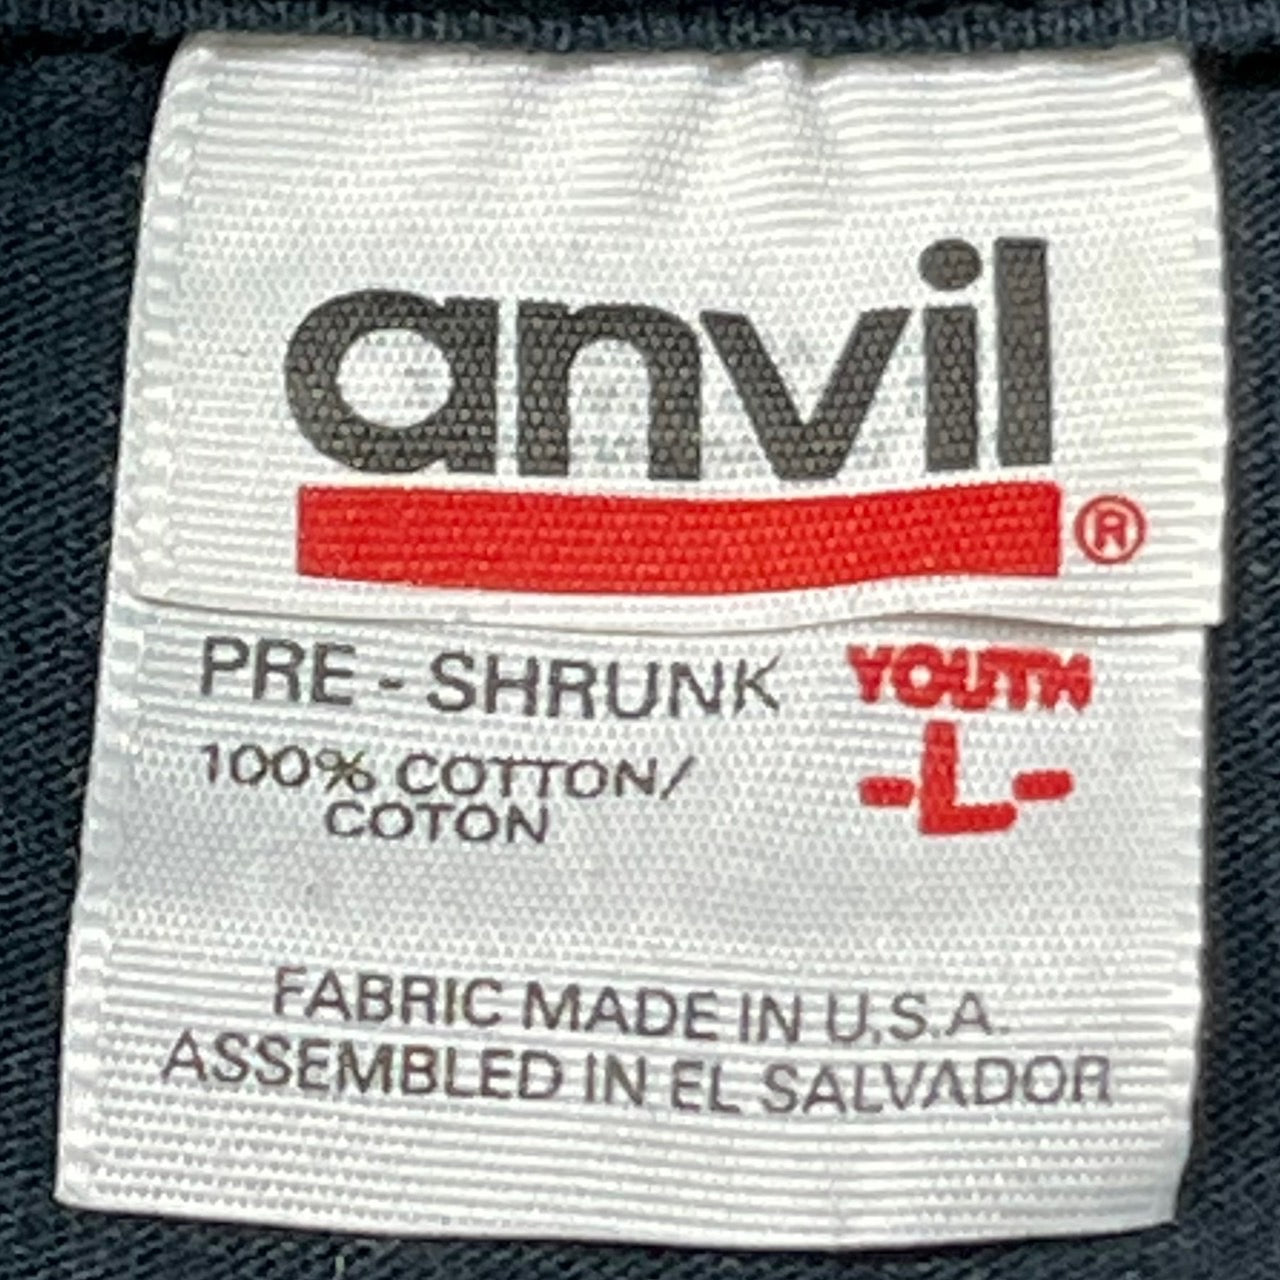 anvil(アンビル) 90’s"DAVID BOWIE" バンドTシャツ L ブラック ©1998 Stenton S.A.　ZIGGY STARDUST